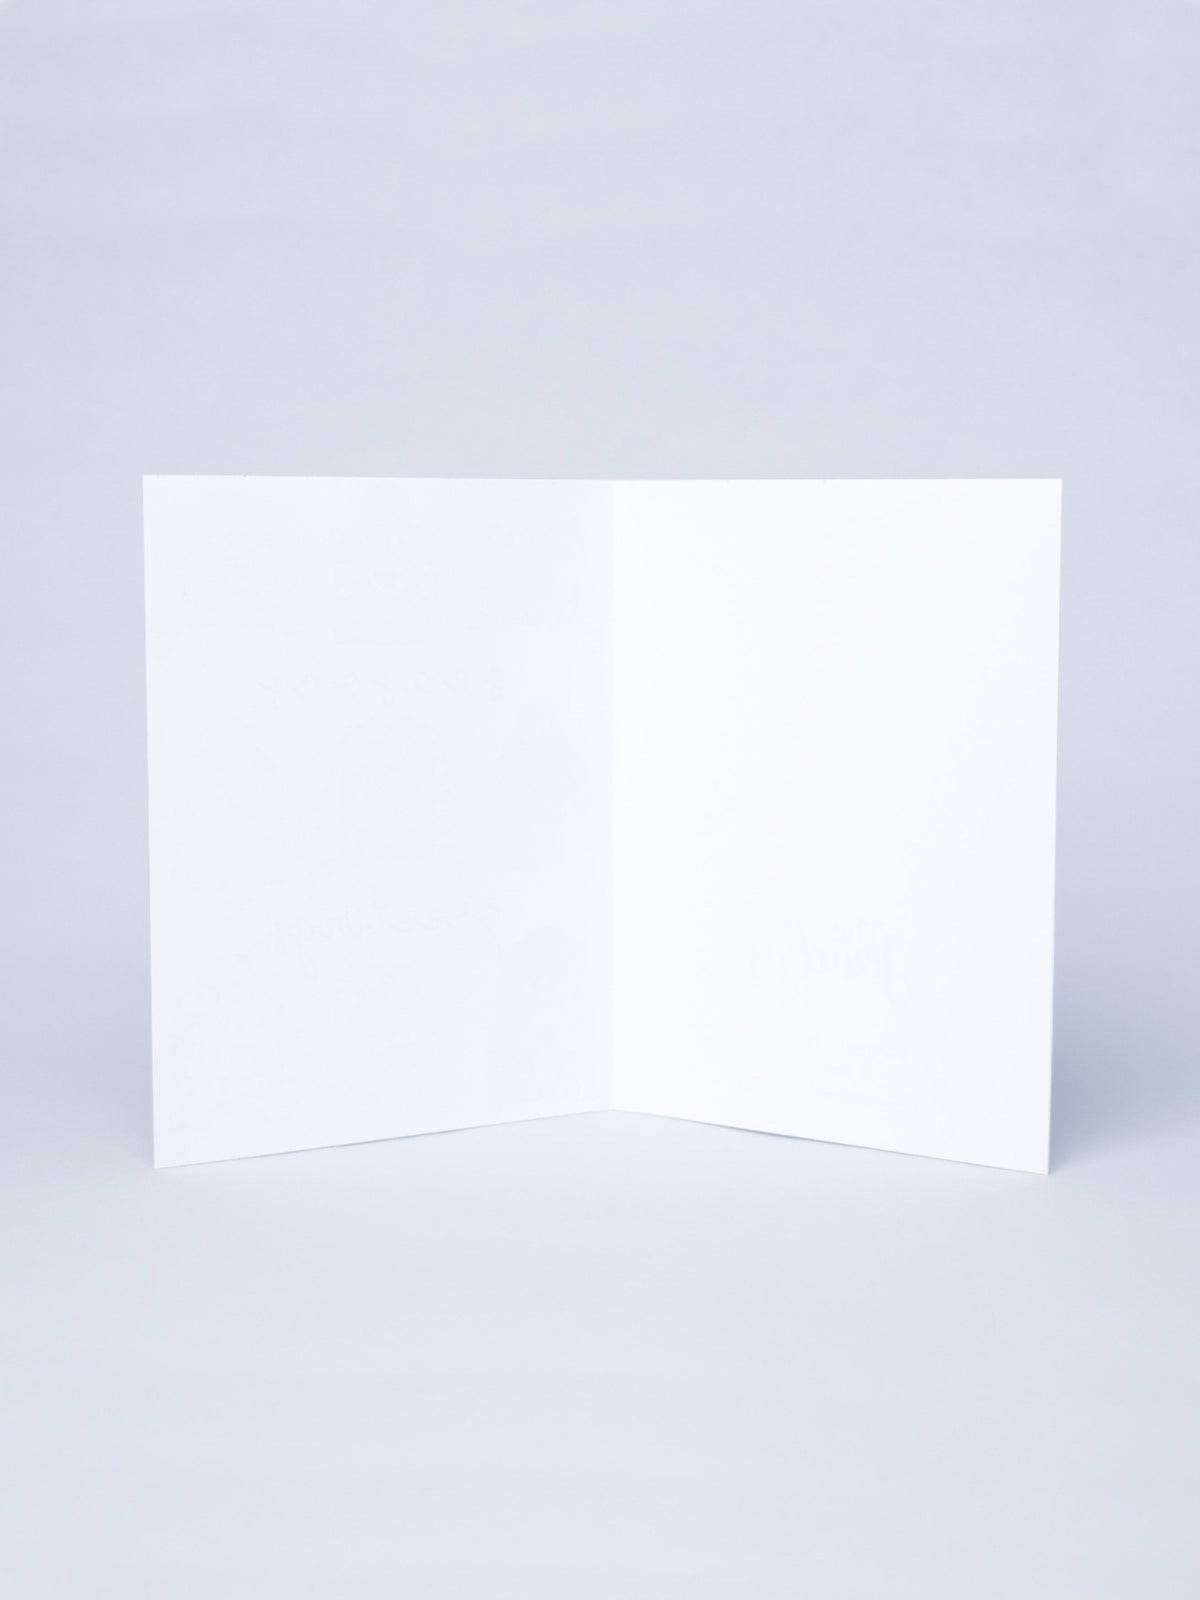 blank white greeting card